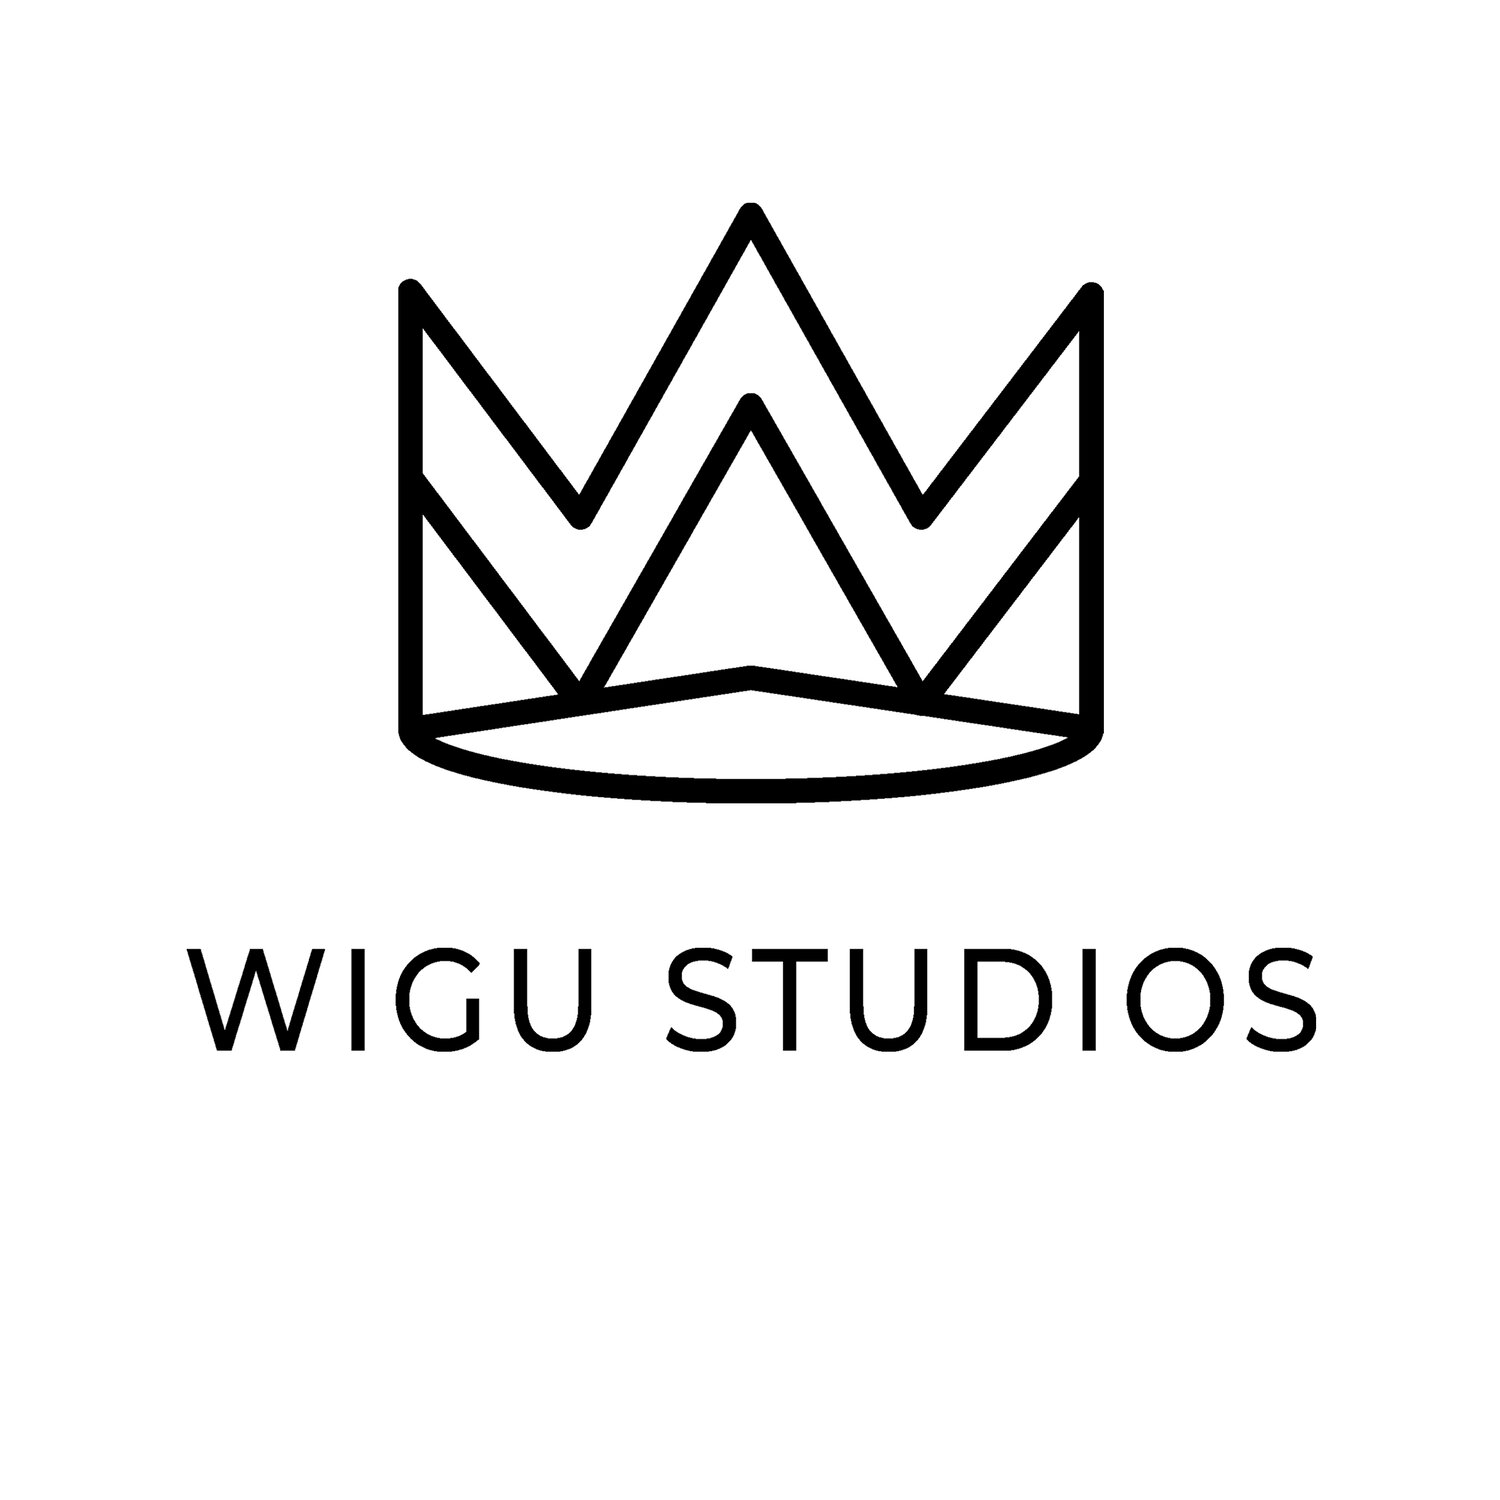 Wigu Studios